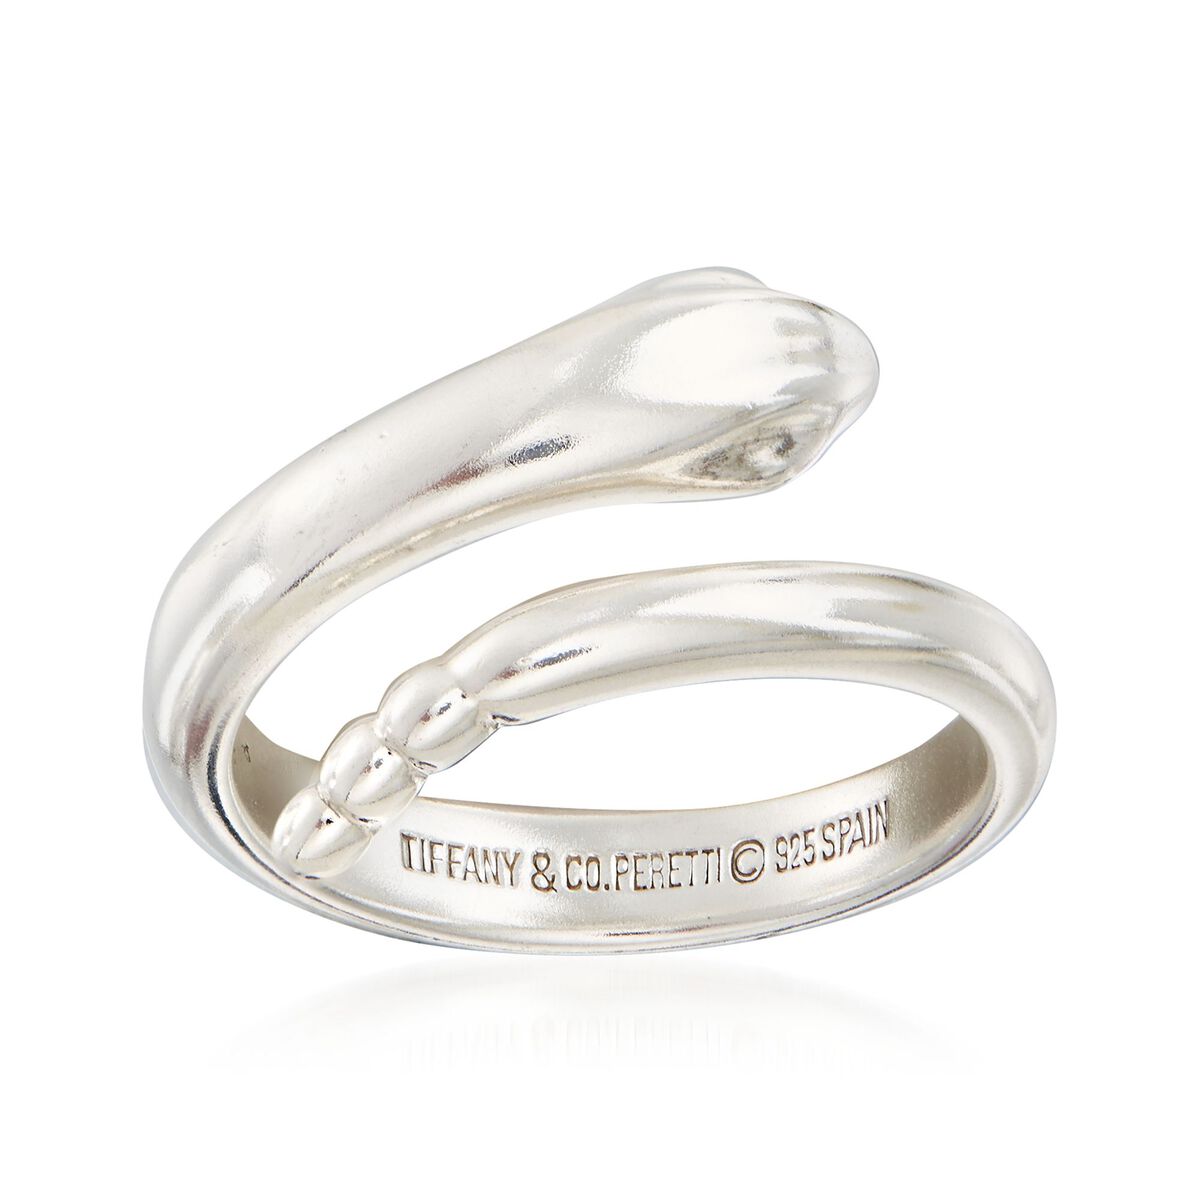 Elsa Peretti™ Snake bangle in sterling silver, small.